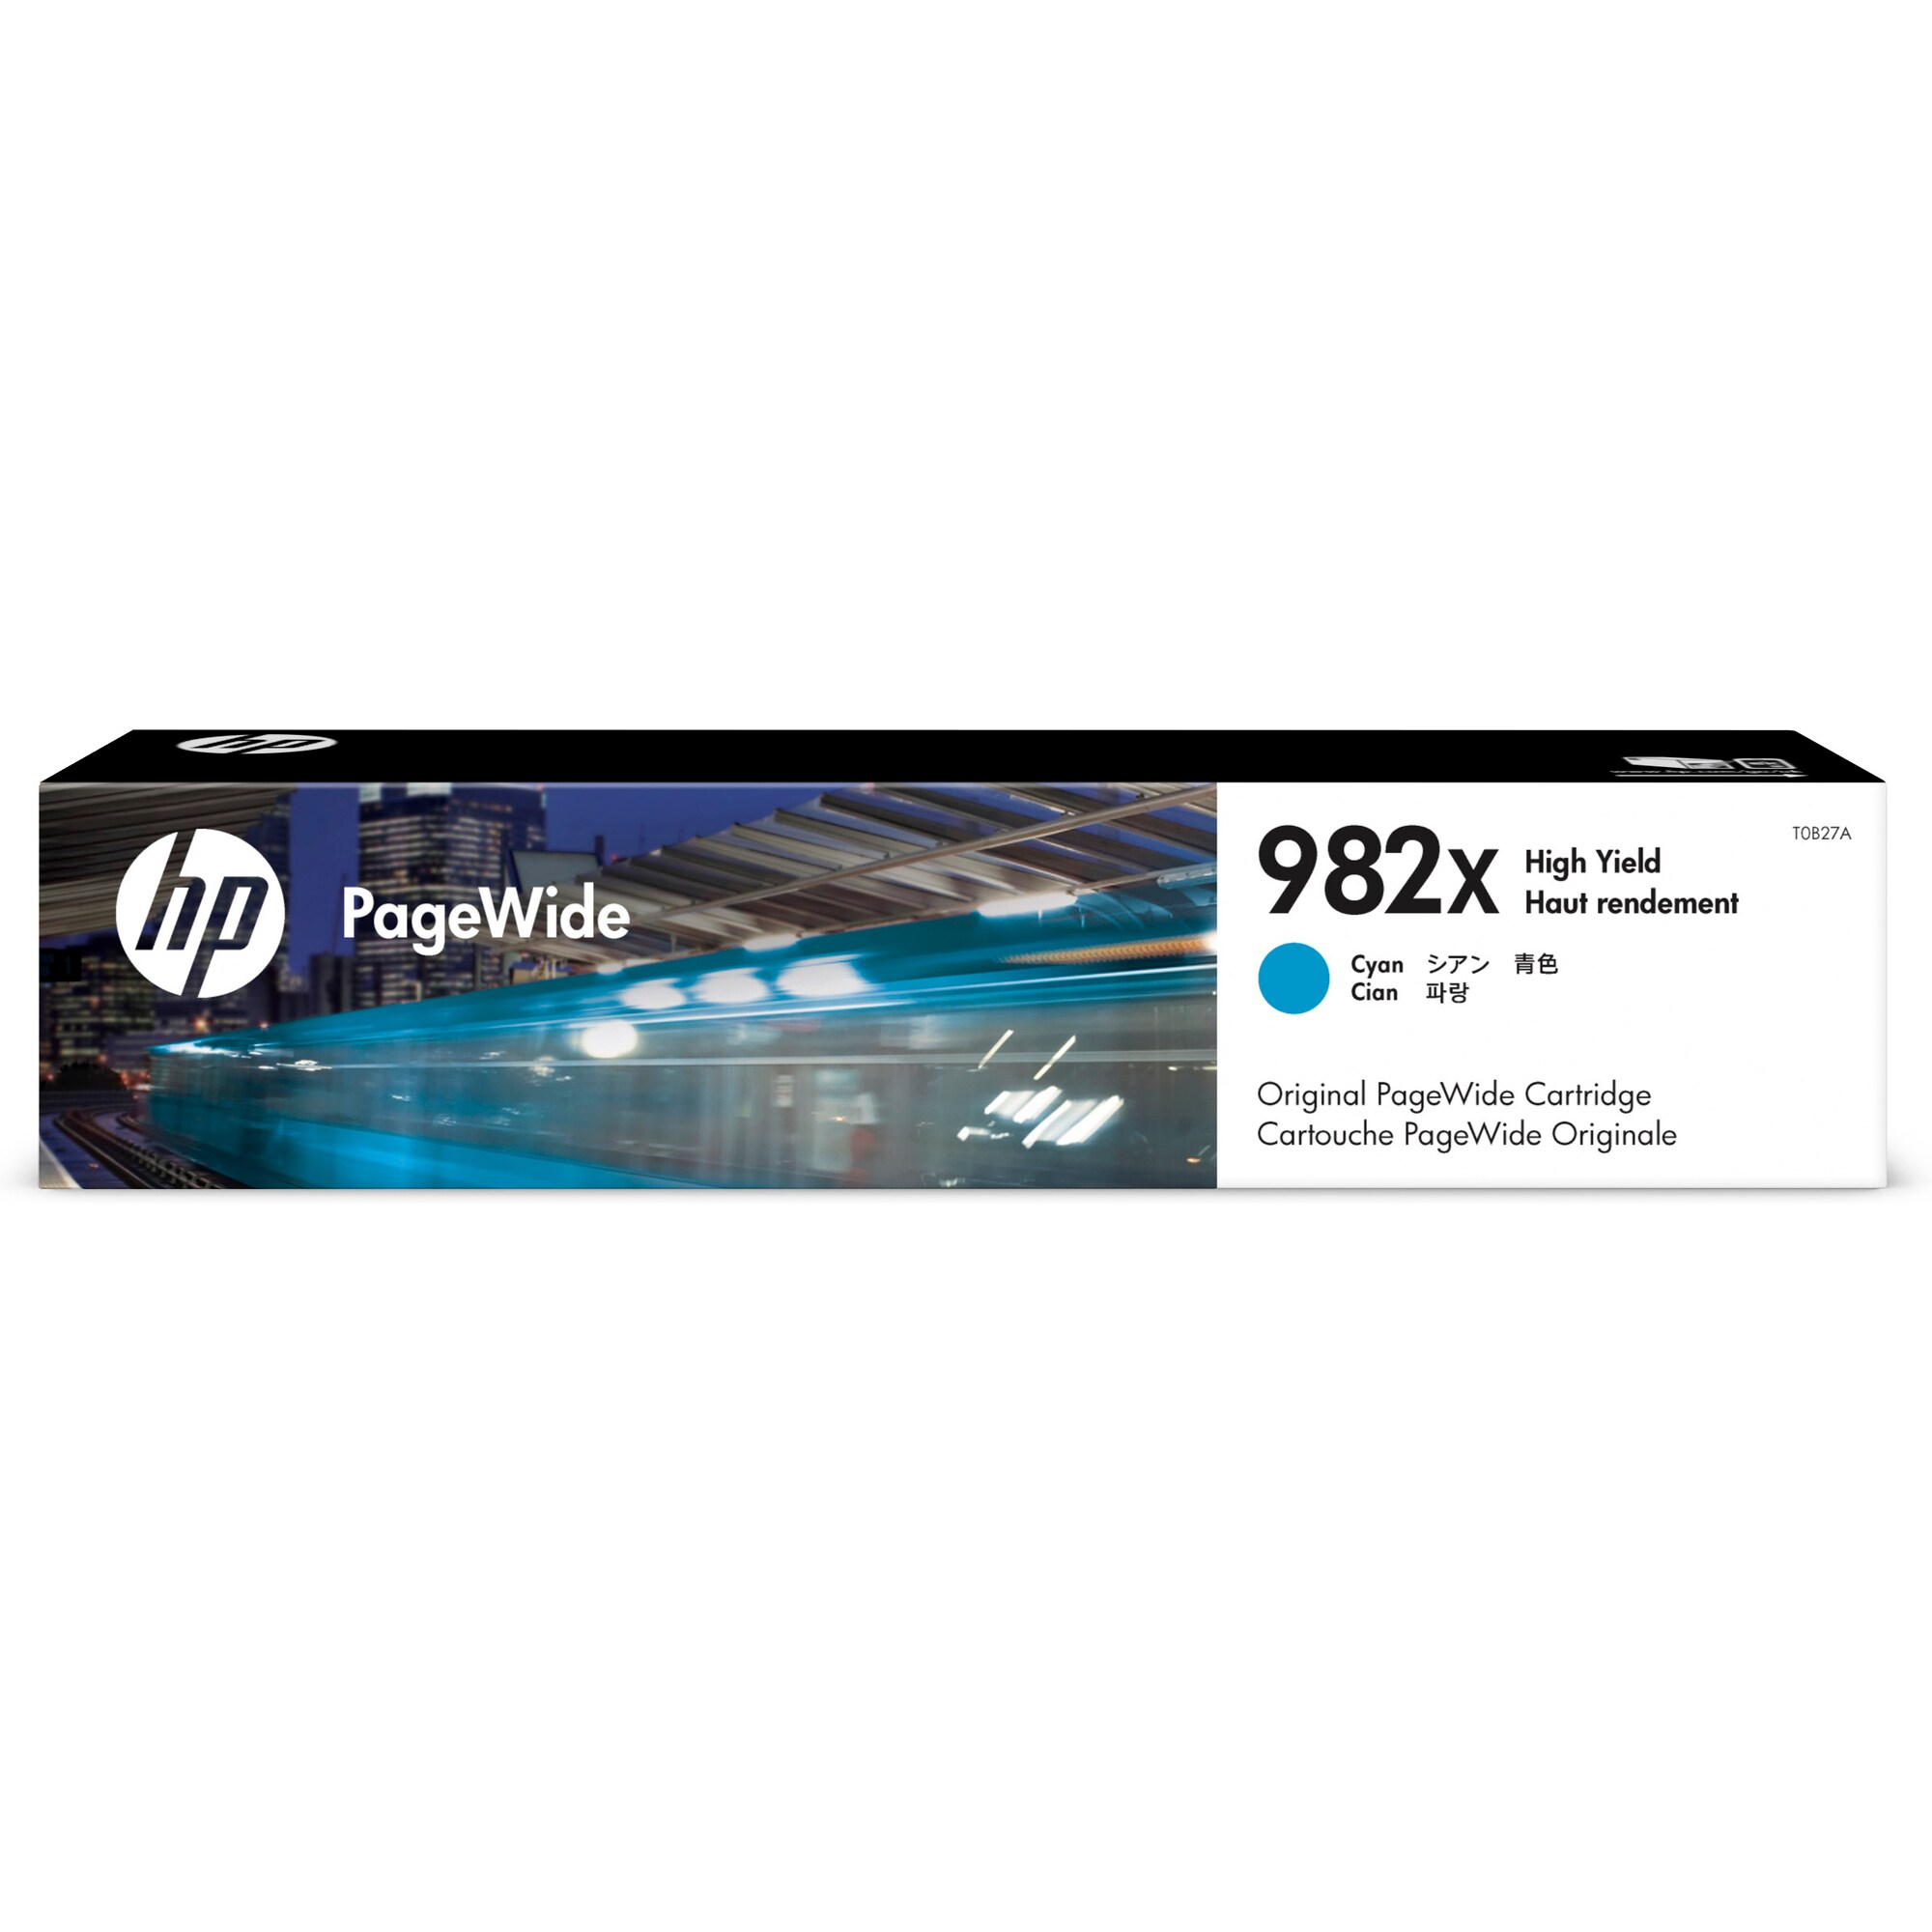 HP 982X High Yield Cyan Original PageWide Cartridge (16, 000 pages)0 